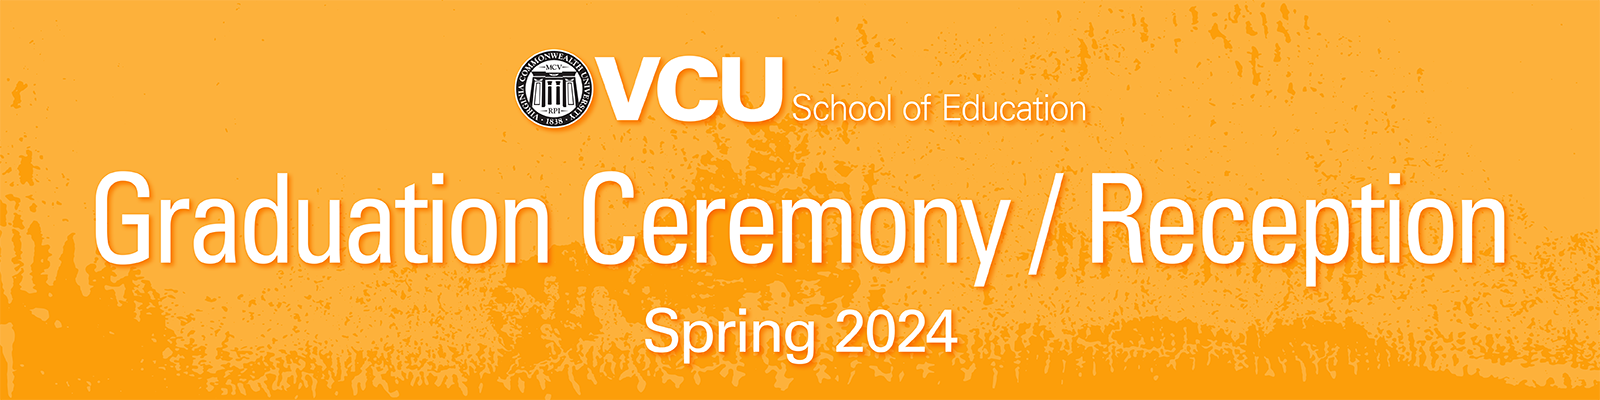 VCU School of Education Graduation Ceremony and Reception - Spring 2024